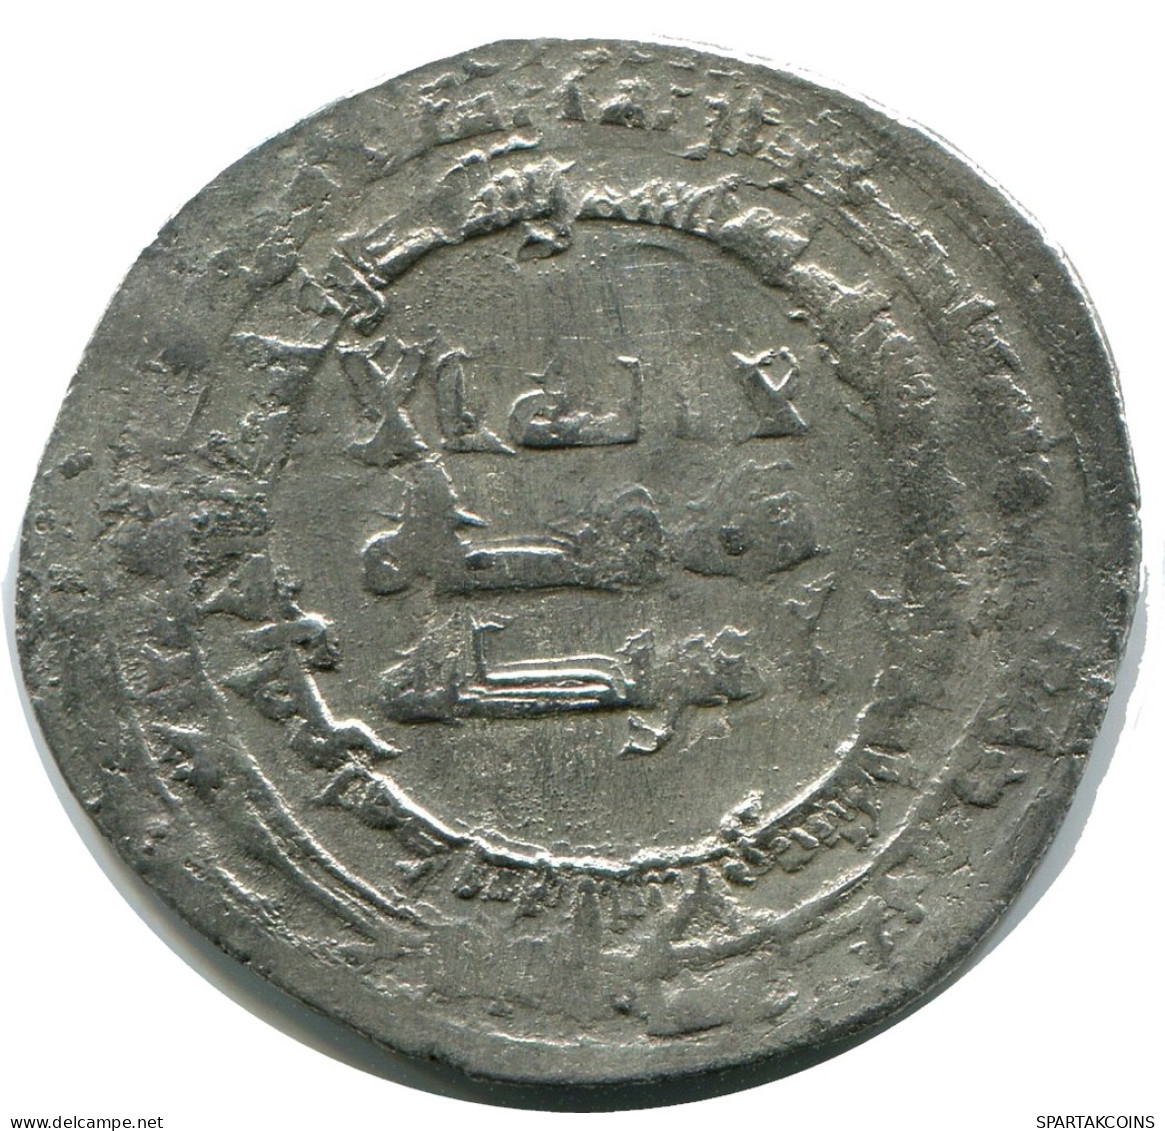 UMAYYAD CALIPHATE Silver DIRHAM Medieval Islamic Coin #AH172.4.D - Oosterse Kunst